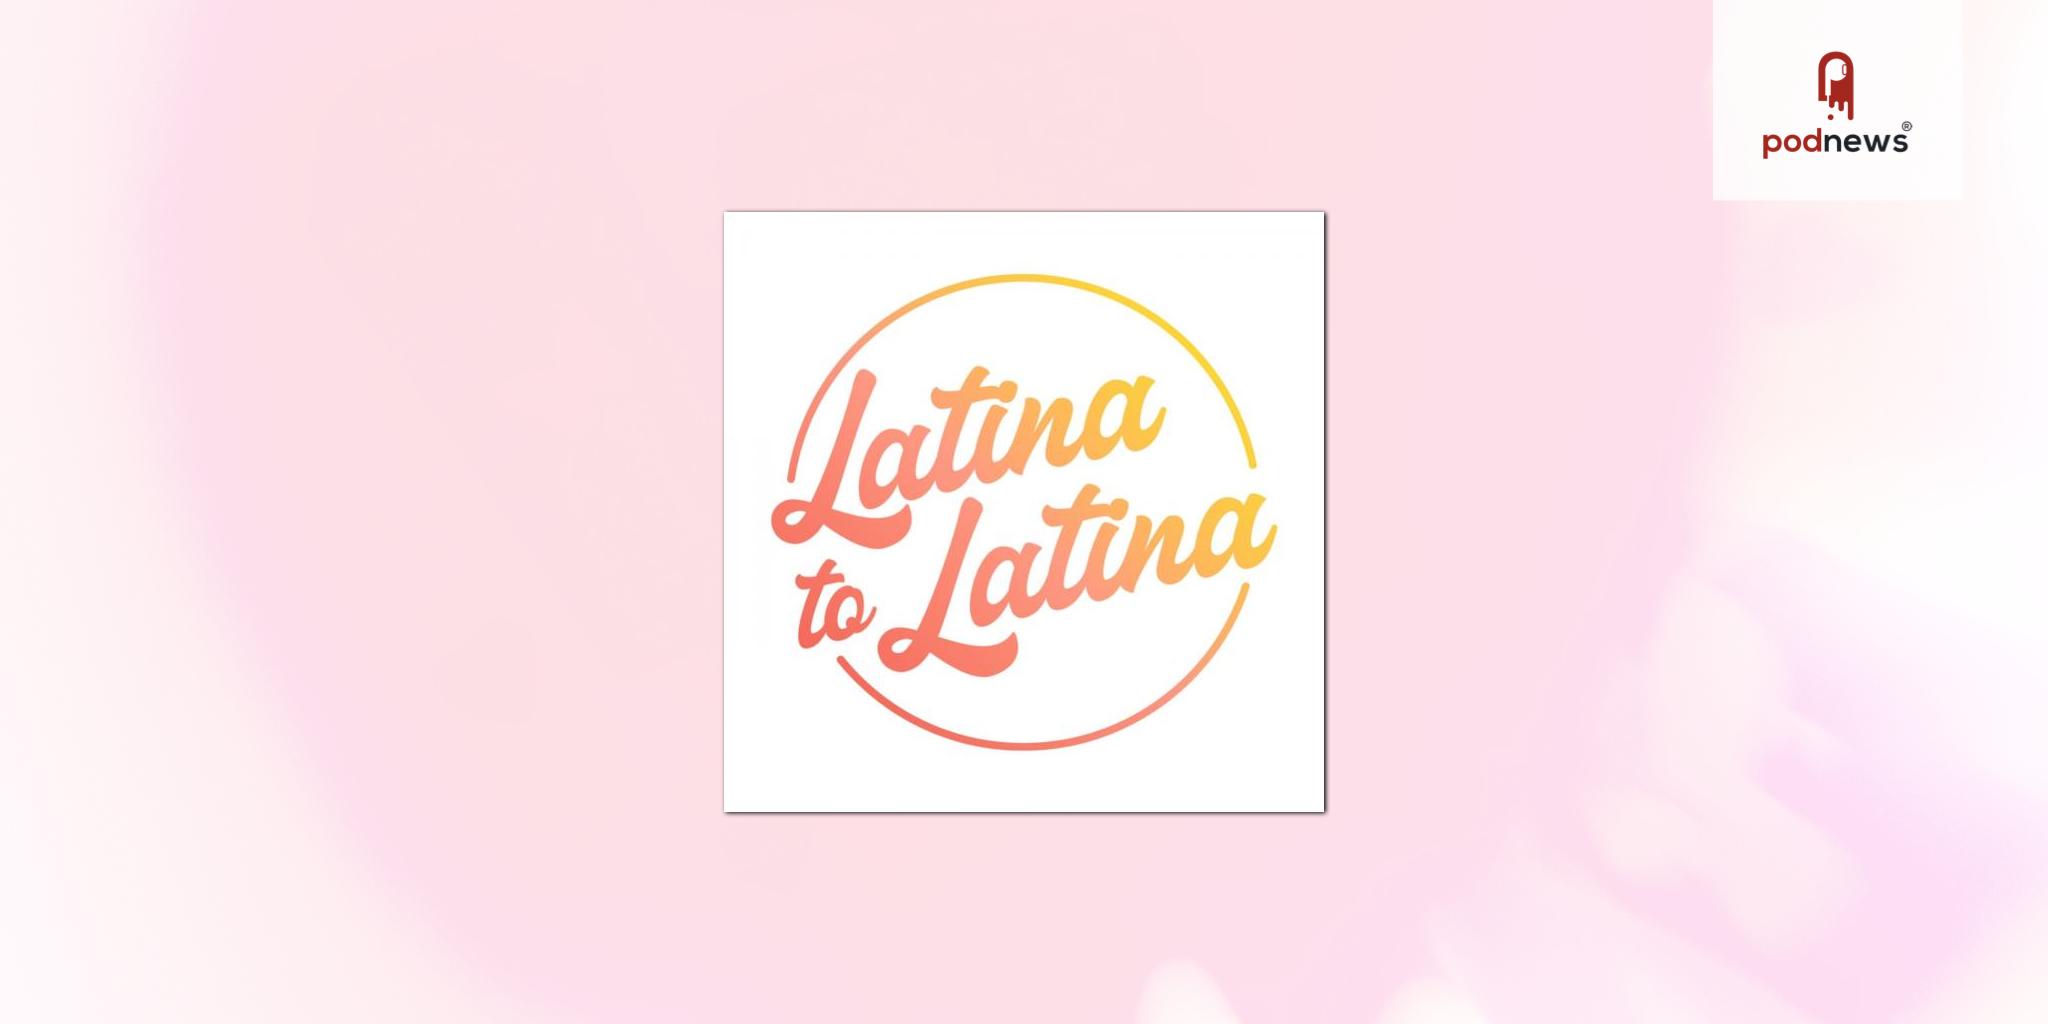 Latina to Latina Podcast Reaches 2 Million Downloads